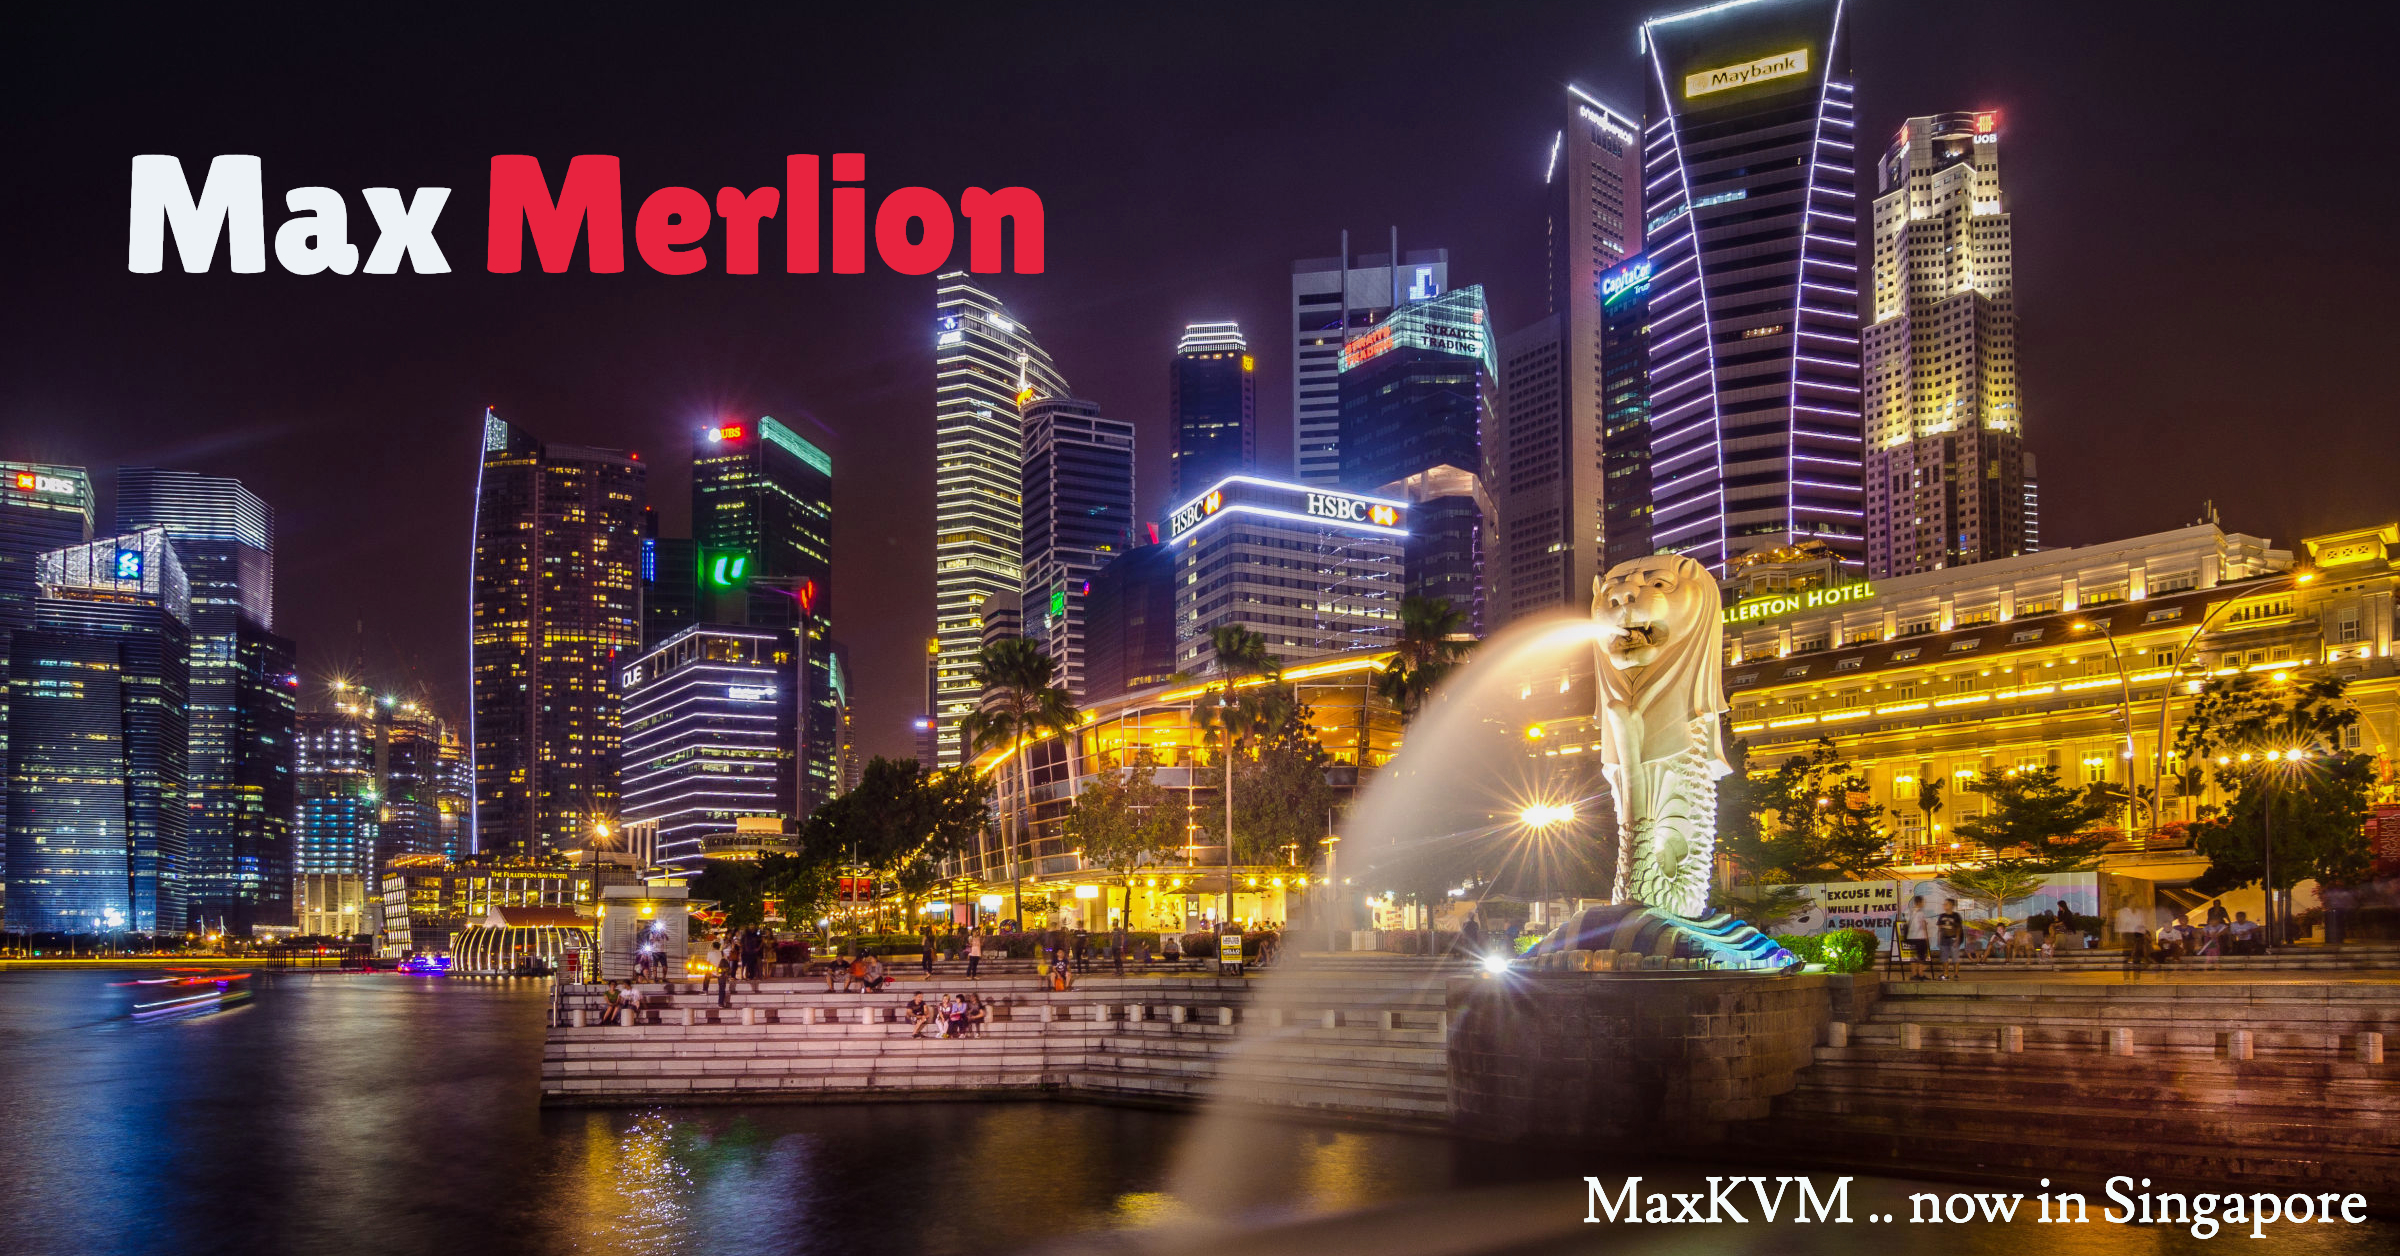 Announcement of Singapore location by MaxKVM